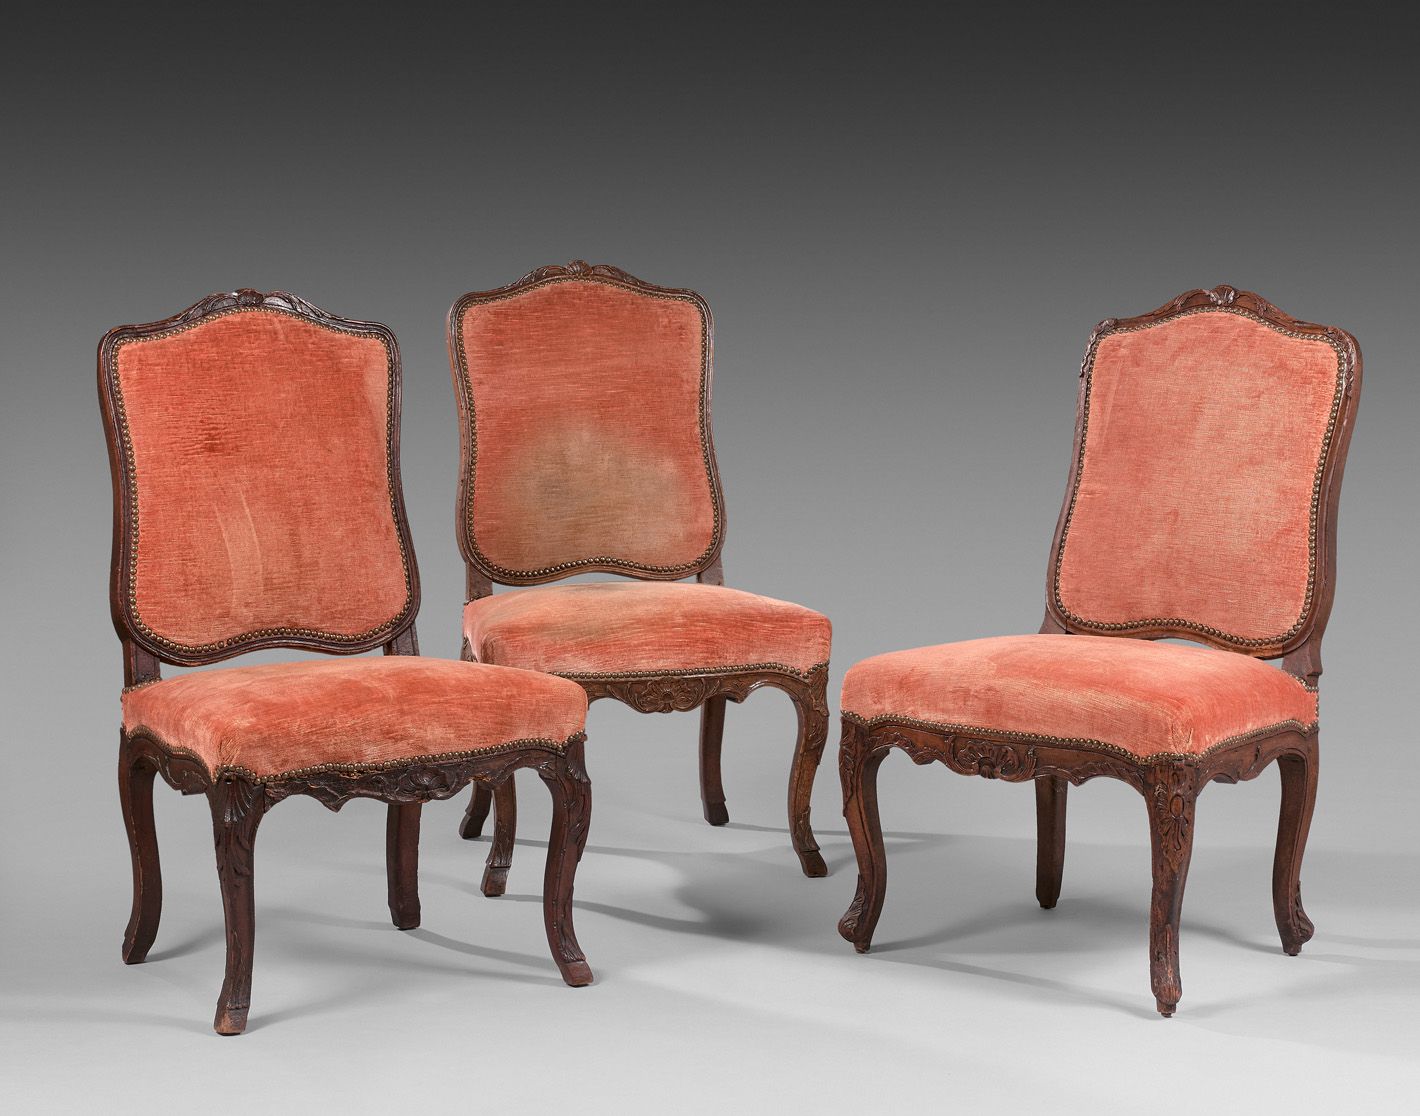 Null 三张平背胡桃木椅子，雕刻着贝壳和叶子，凸起的腿带着剑齿。摄政时期。高度98 - 宽度57 - 深度51厘米（锈色天鹅绒软垫）。